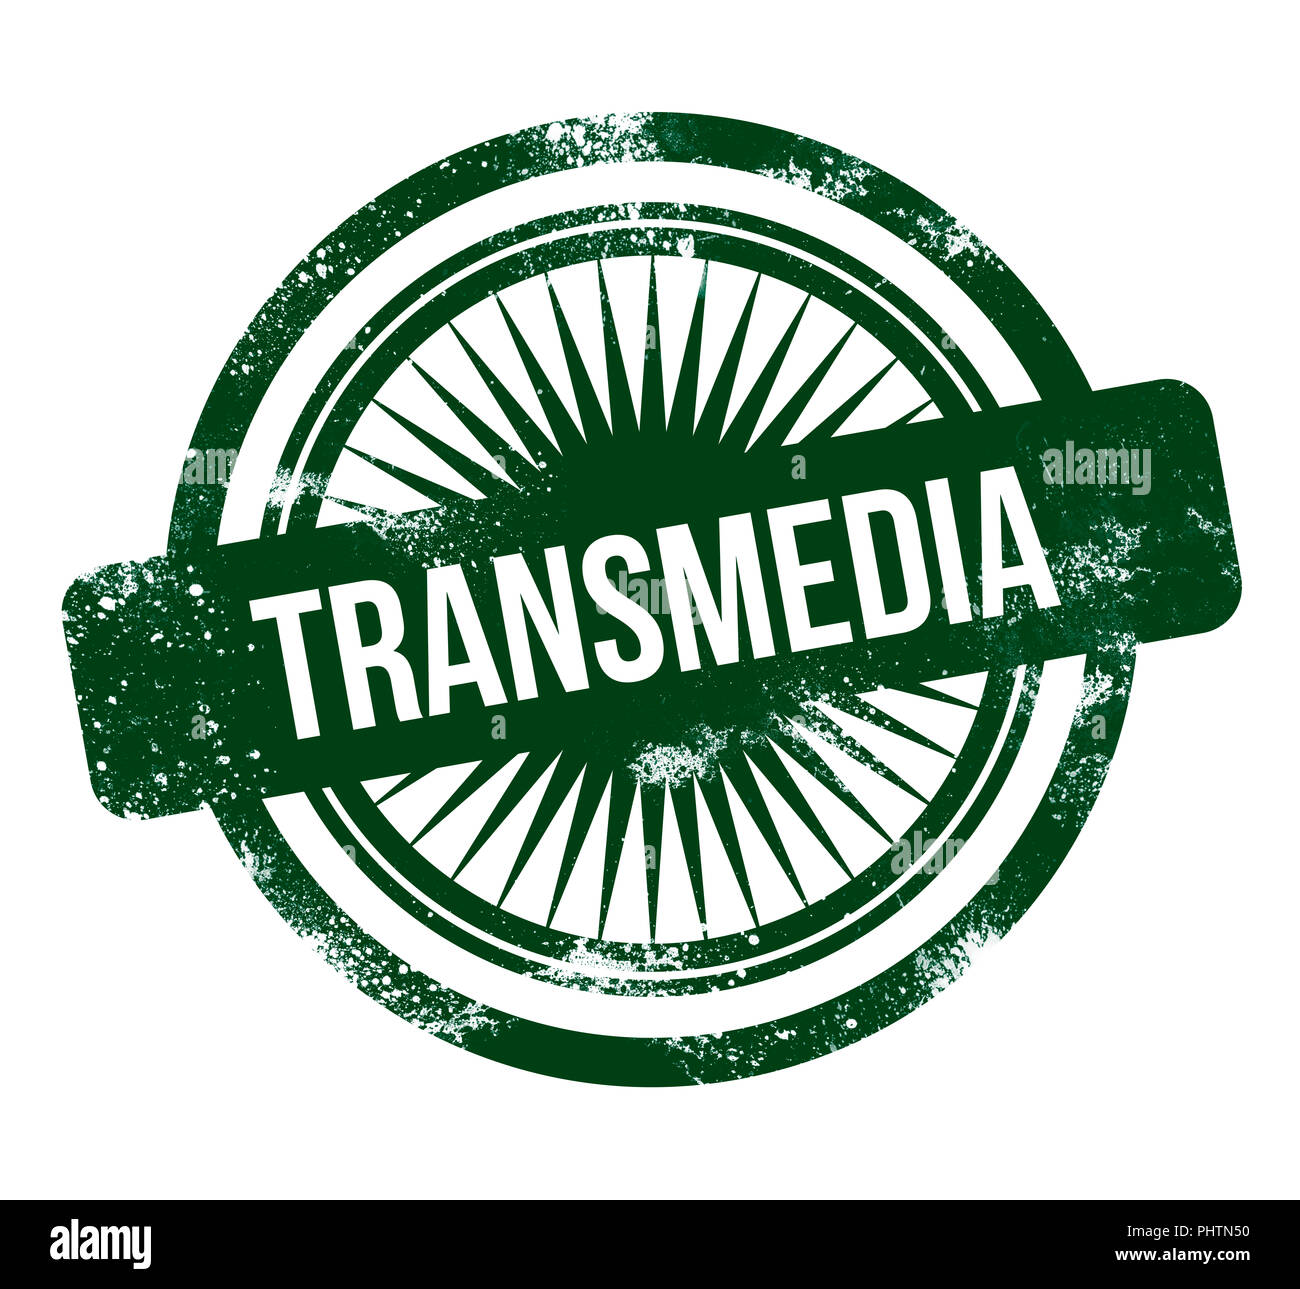 Transmedia - green grunge stamp Stock Photo